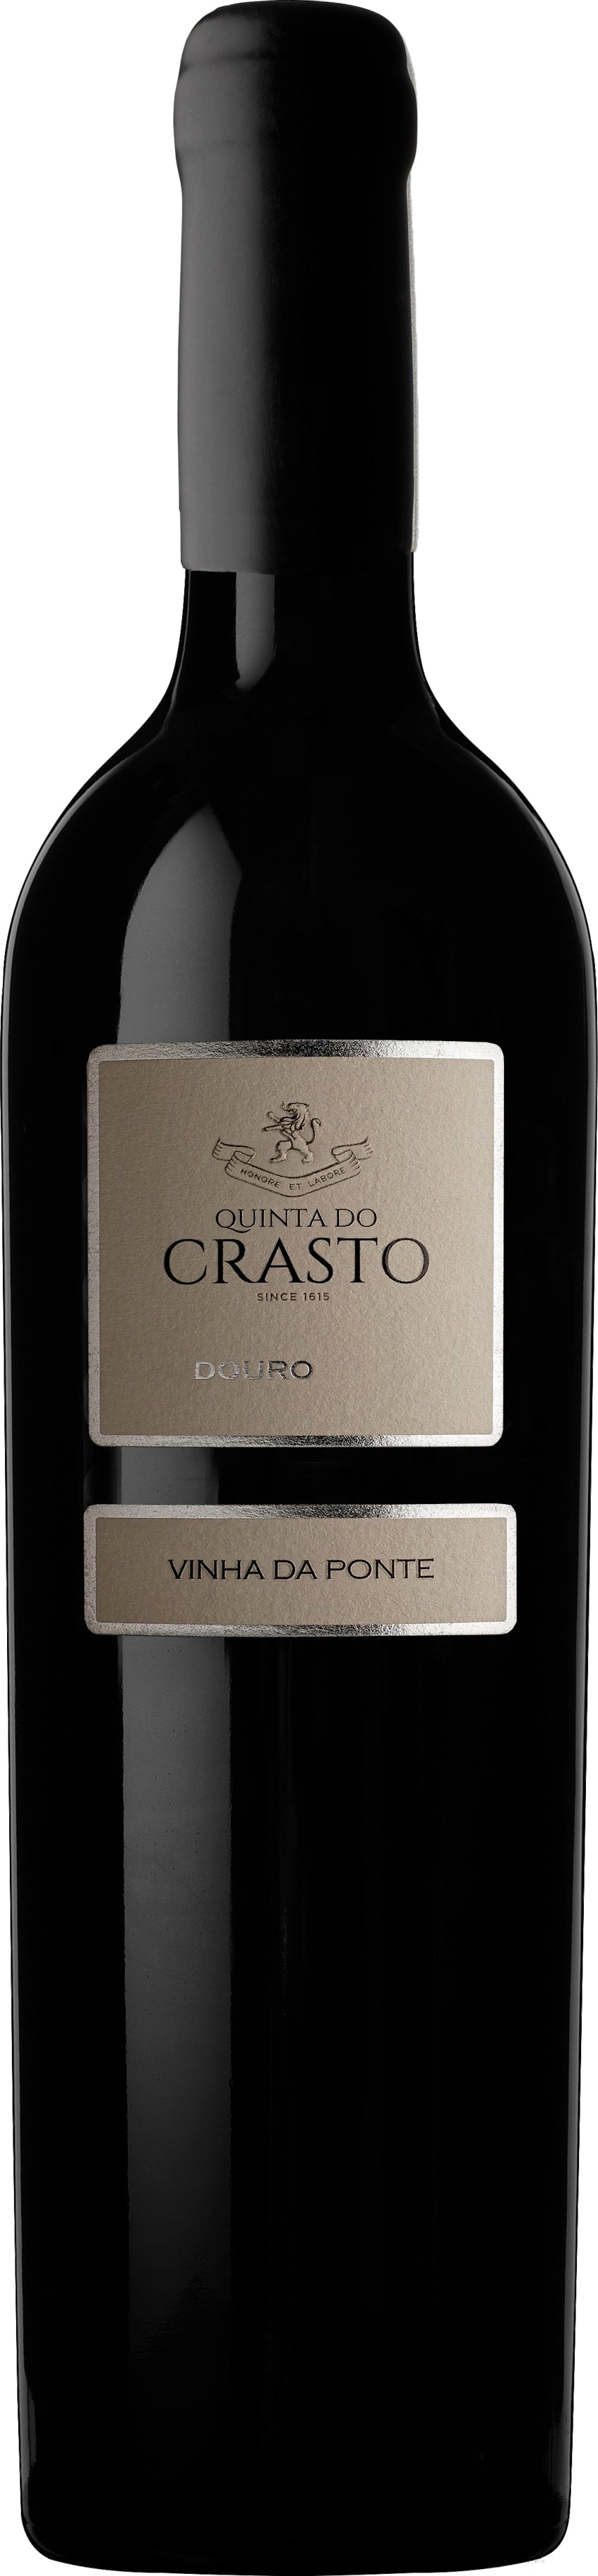 Quinta Do Crasto Vinha da Ponte 2018 75cl - Buy Quinta Do Crasto Wines from GREAT WINES DIRECT wine shop